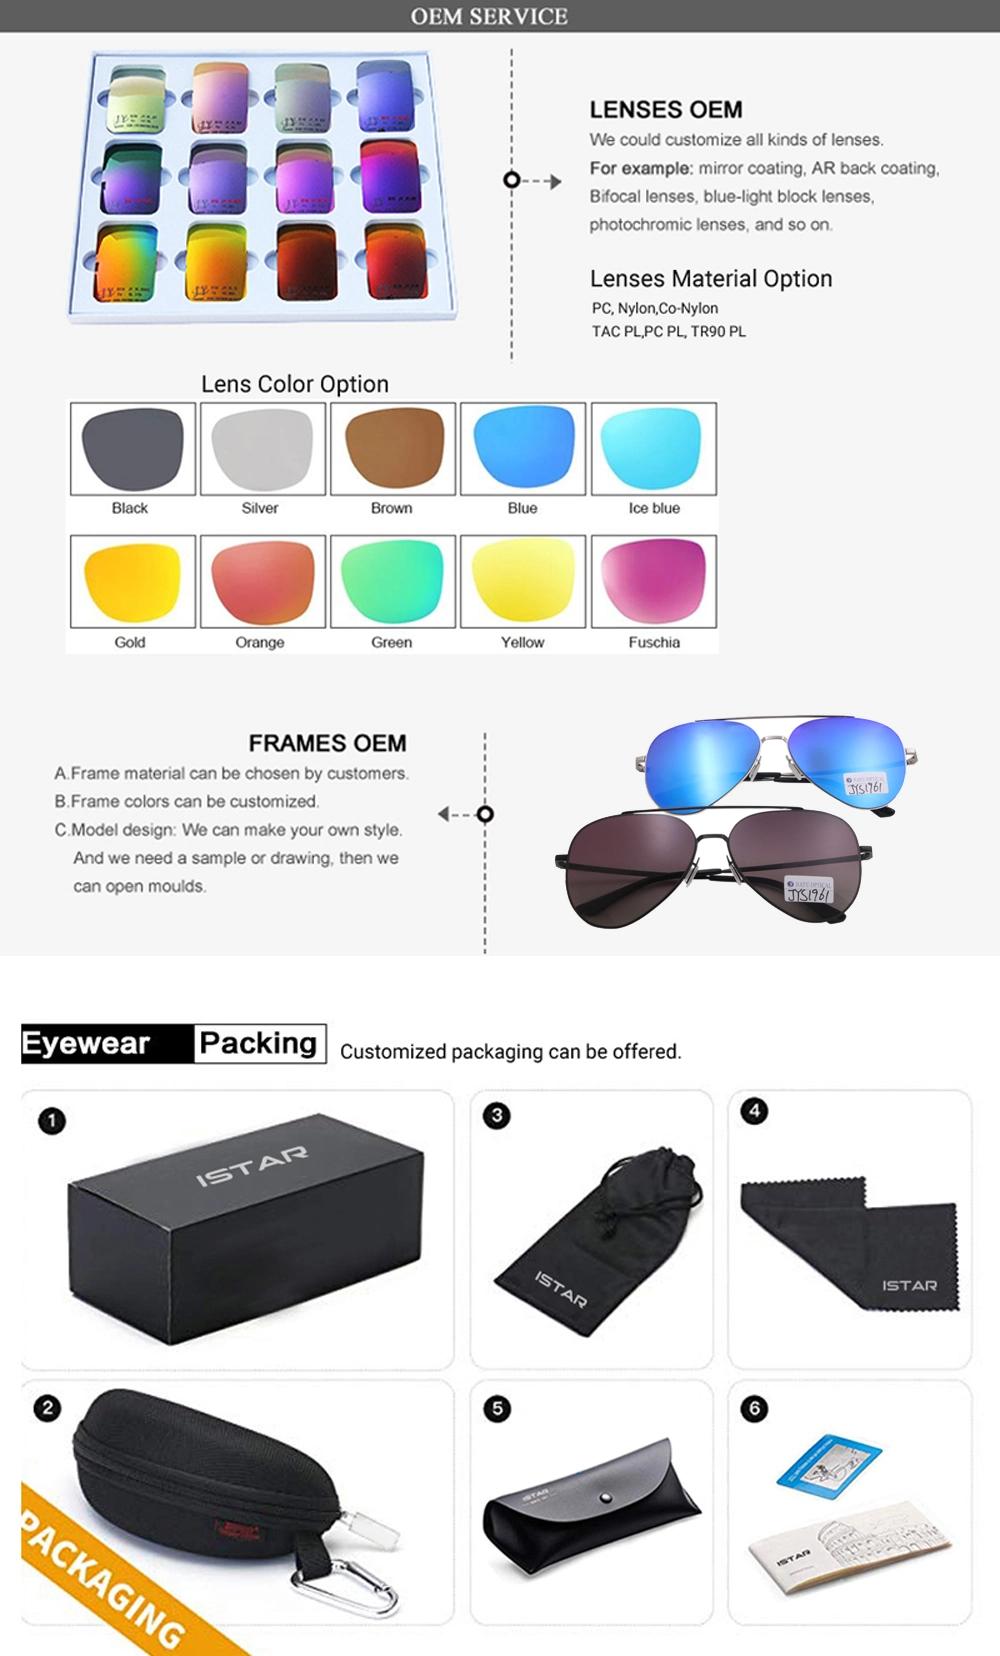 Pink Lenses Double Bridge High Quality Golden Metal Sunglasses for Lady